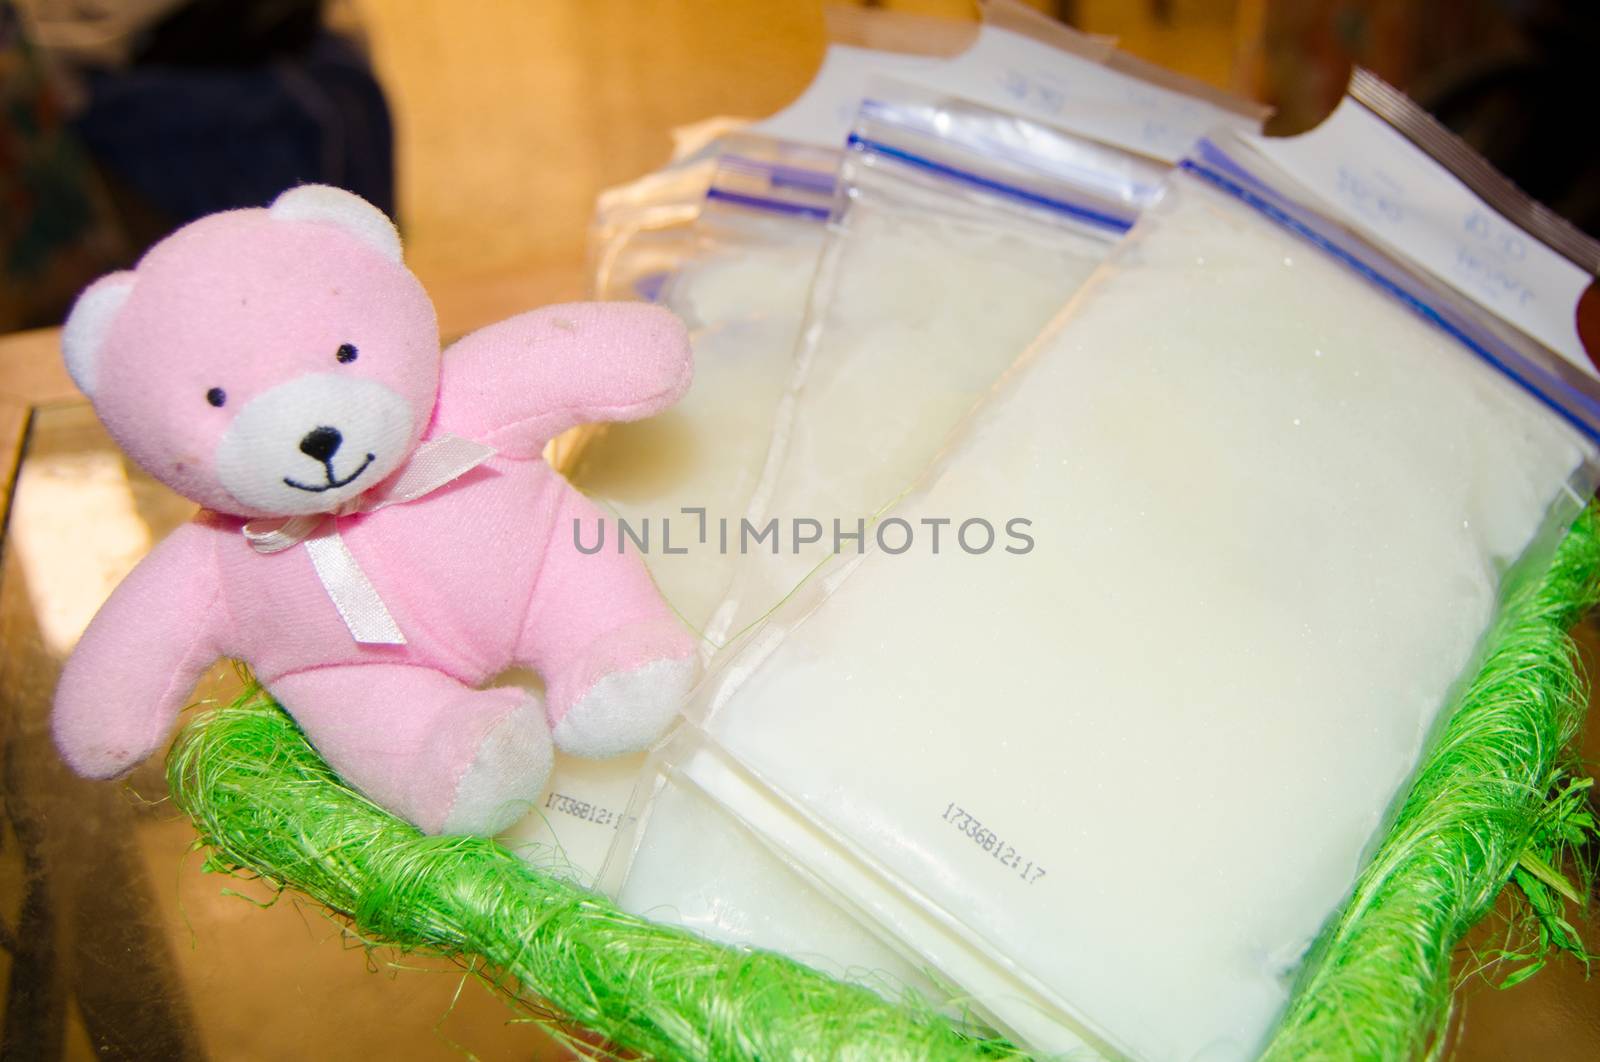 frozen breast milk in storage bags in the basket,breastfeeding concept